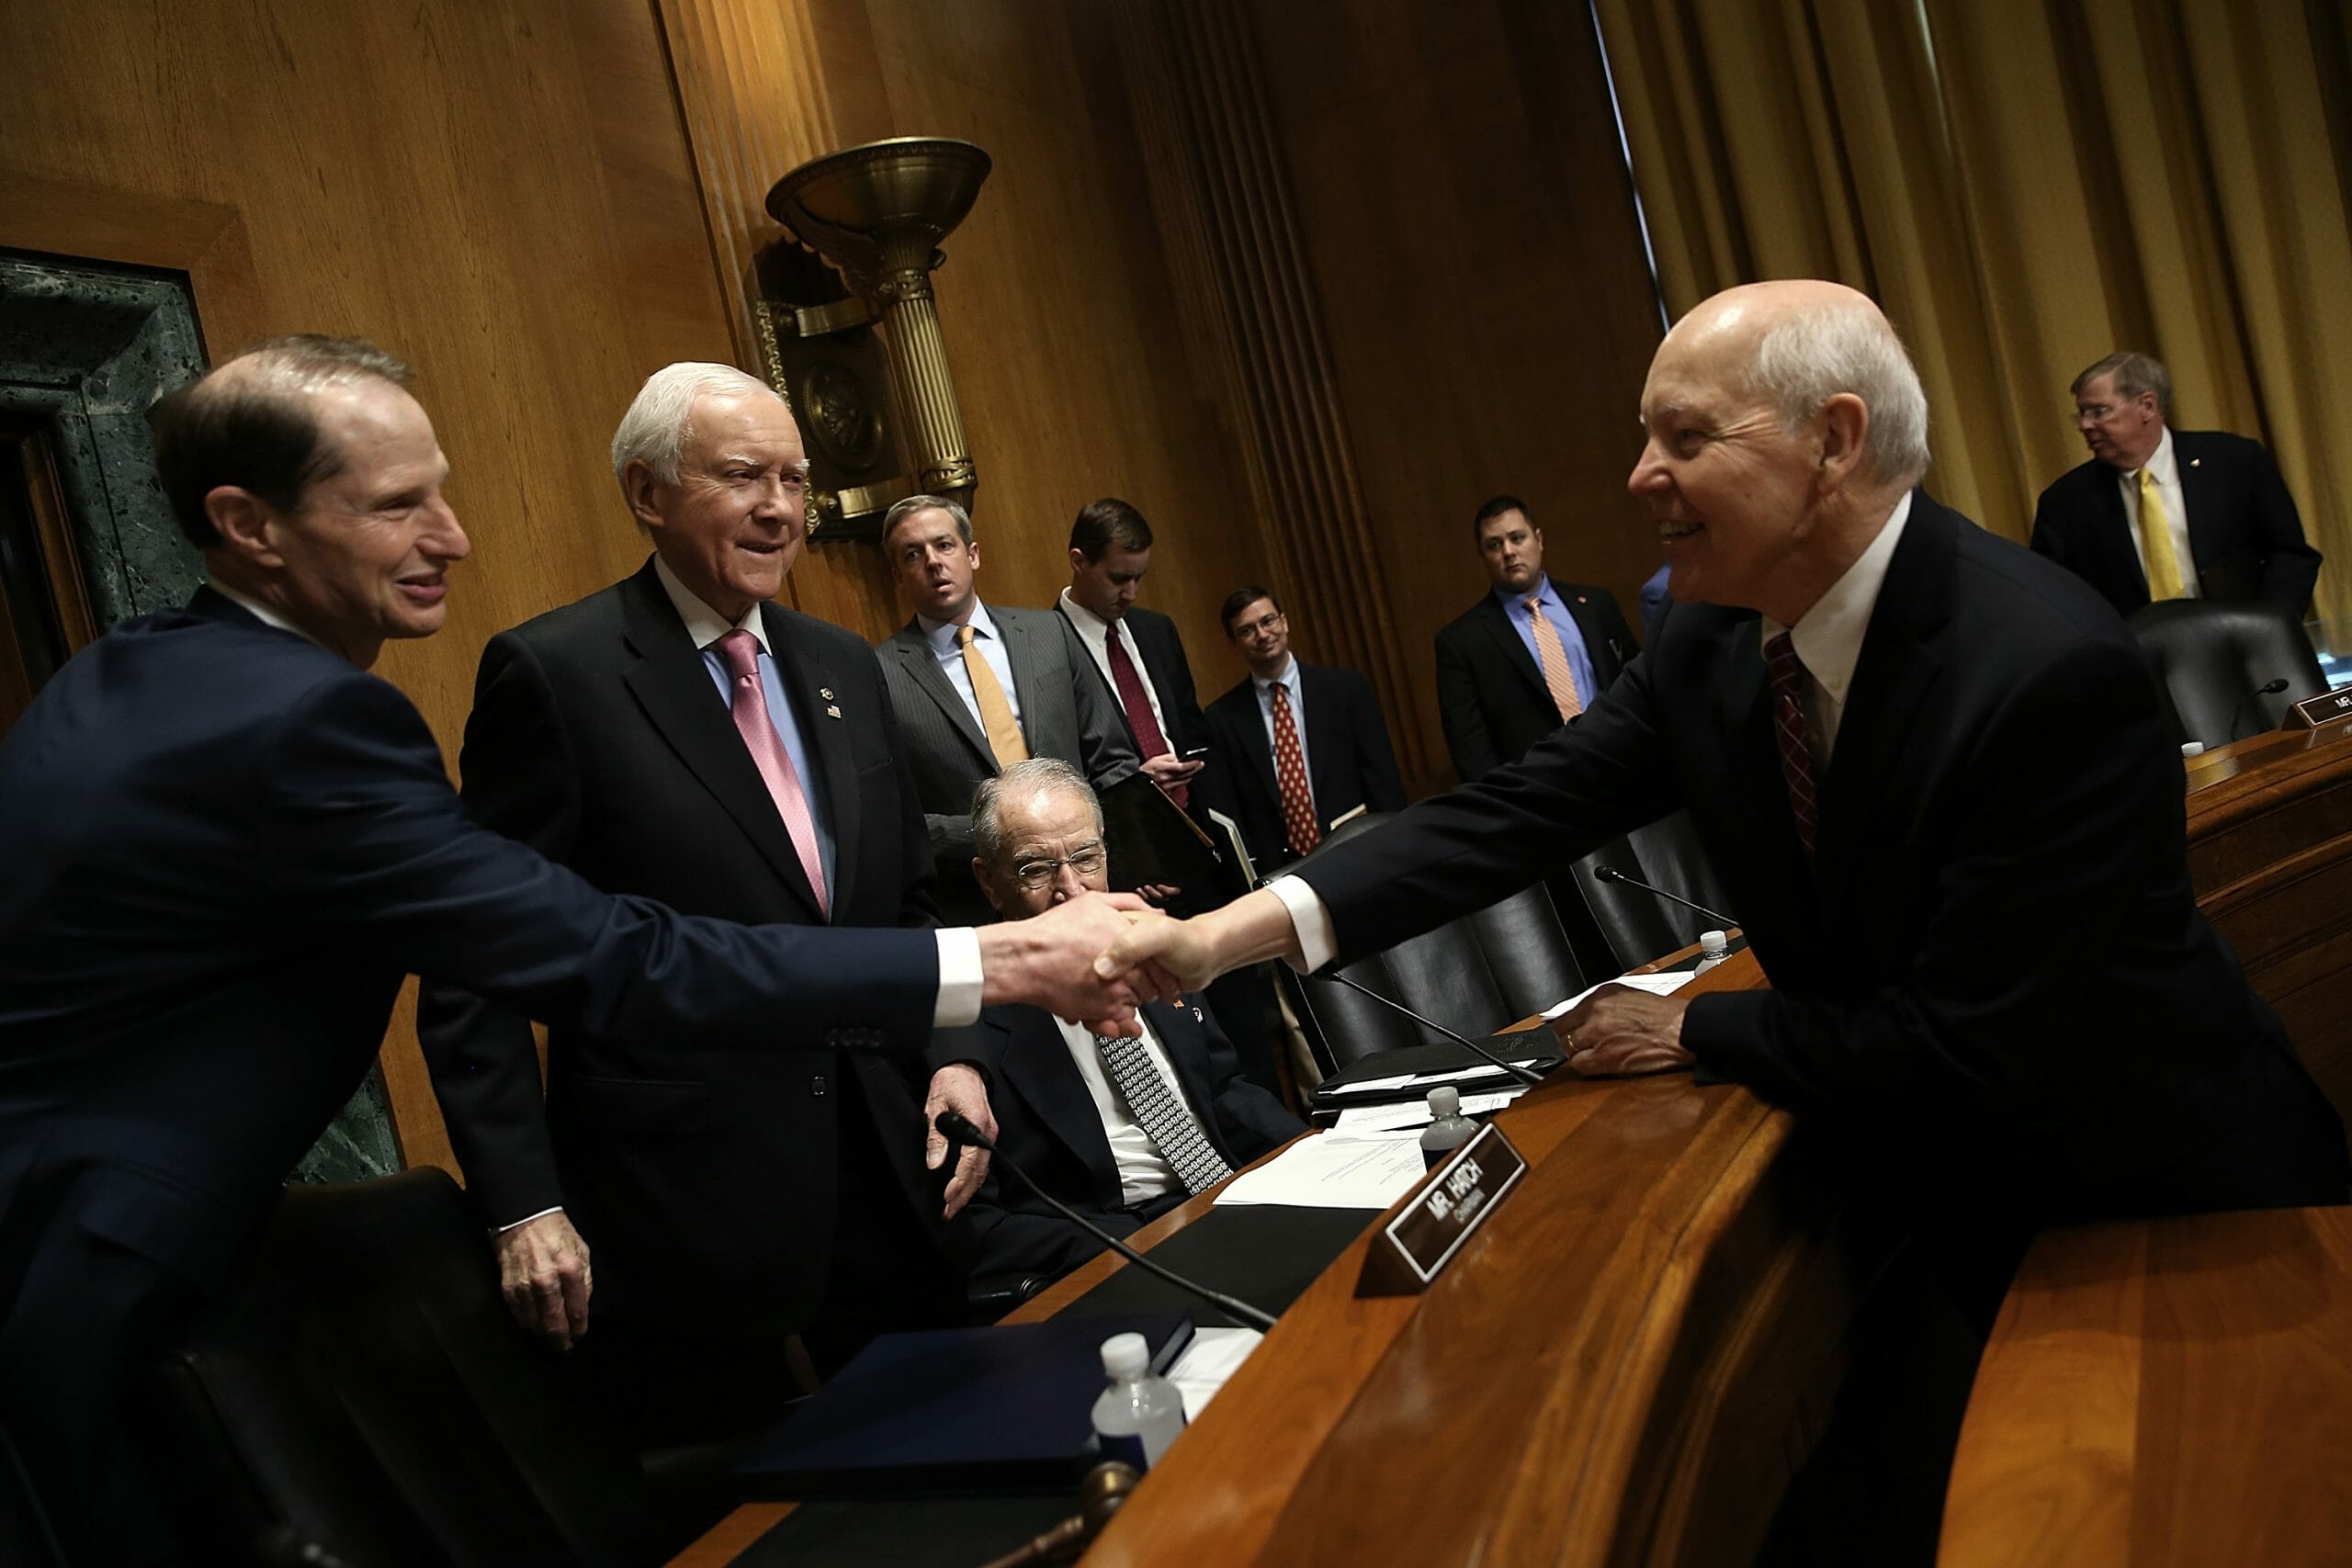 Senate Finance Committee members